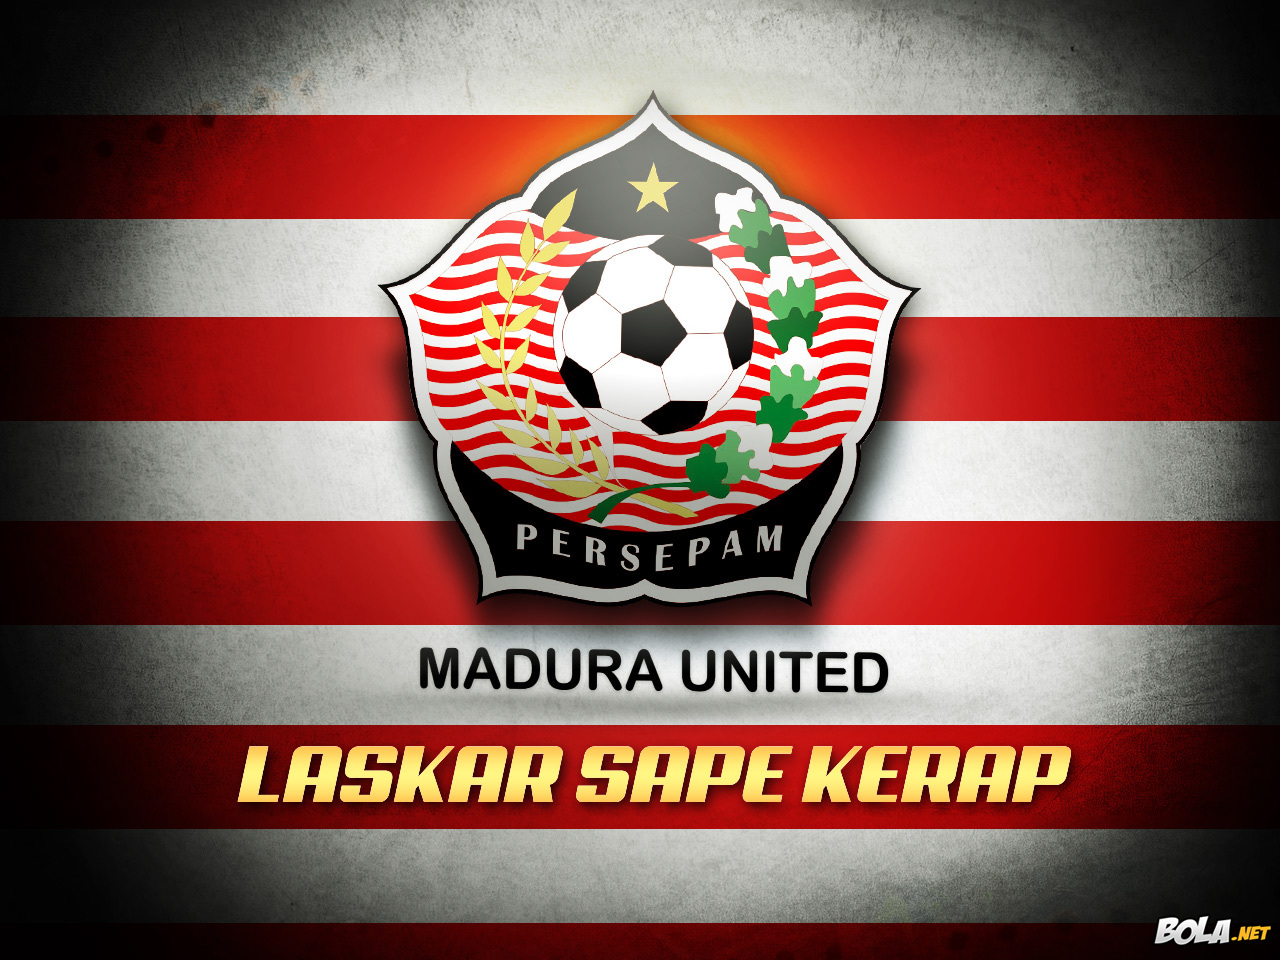 wallpaper madura united,emblem,competition event,logo,crest,flag